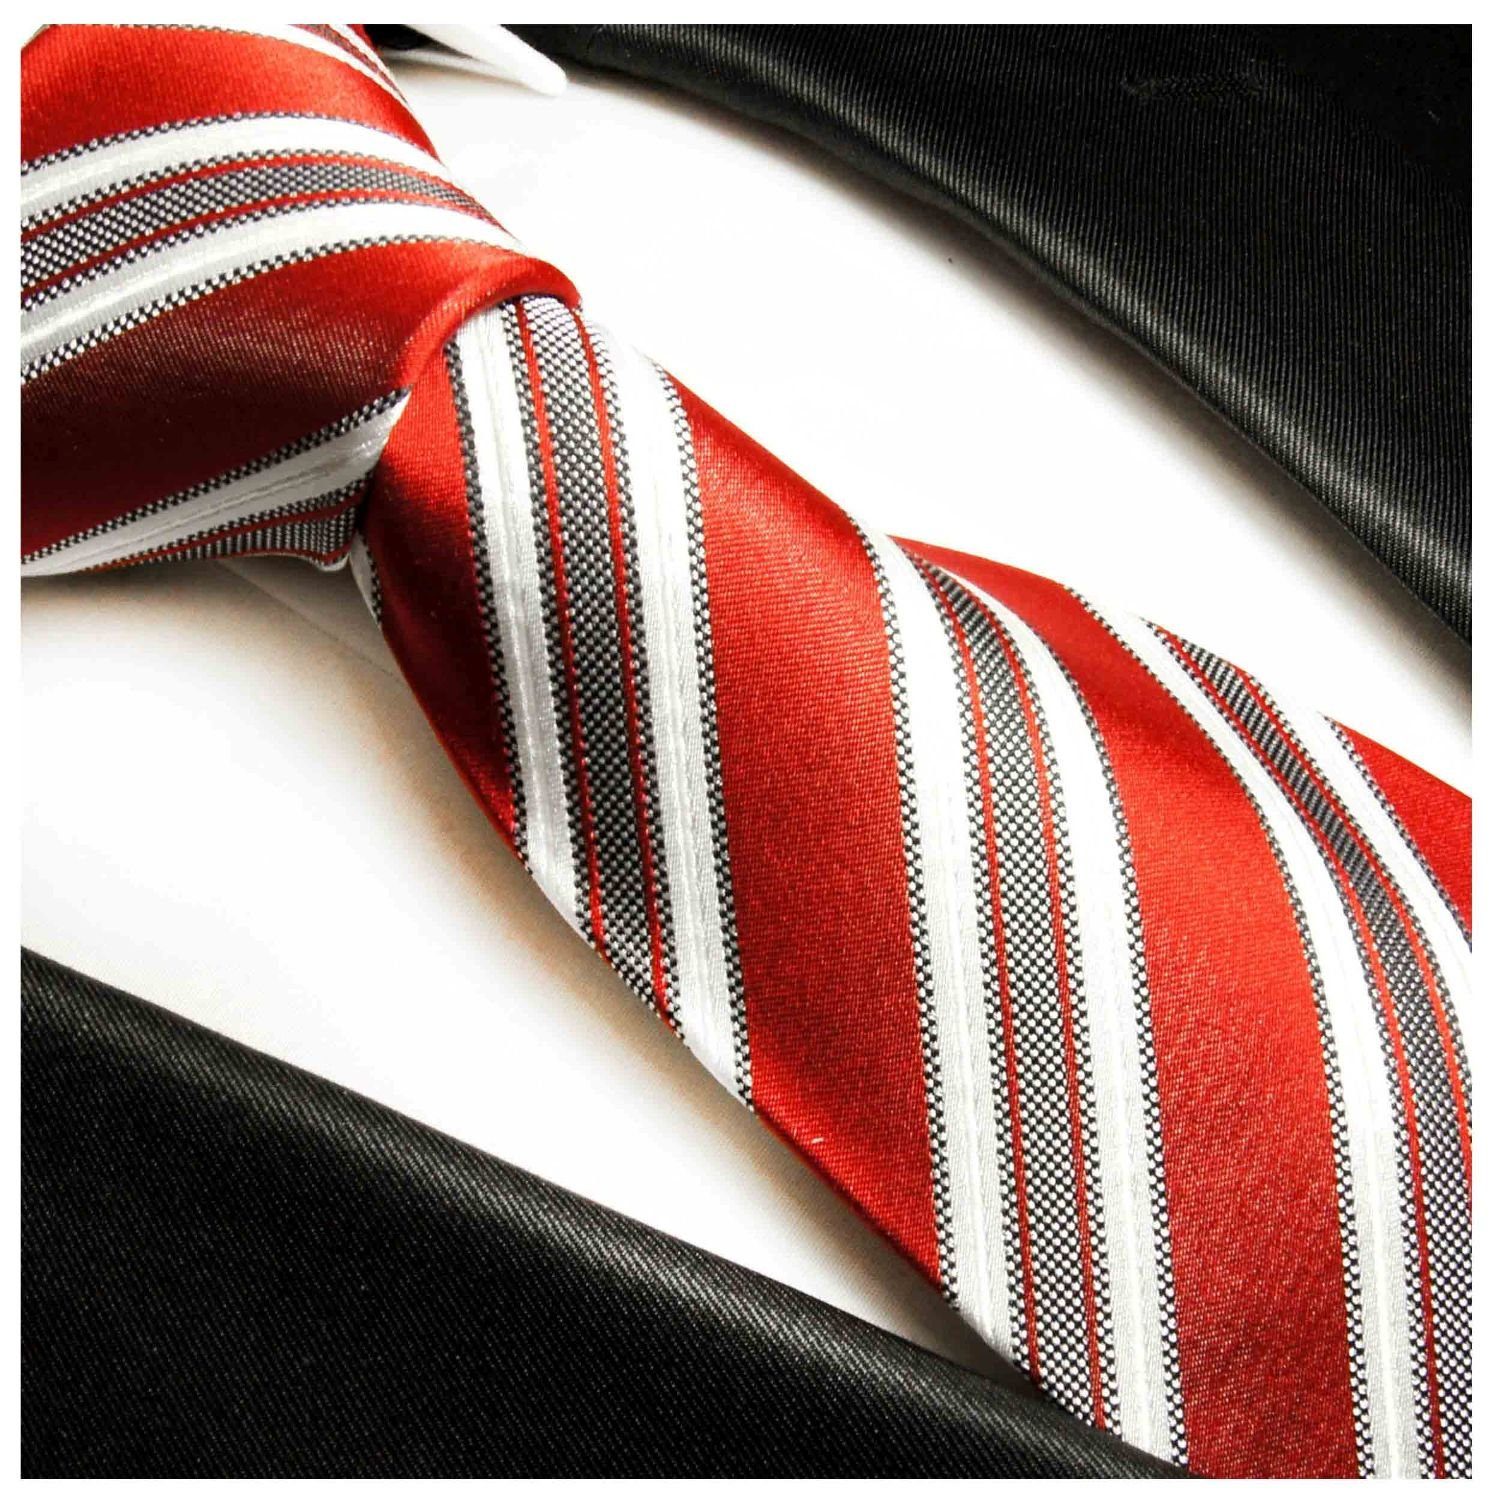 Paul Malone Krawatte modern Seide Schmal 424 Designer Herren (6cm), Seidenkrawatte rot Schlips gestreift 100